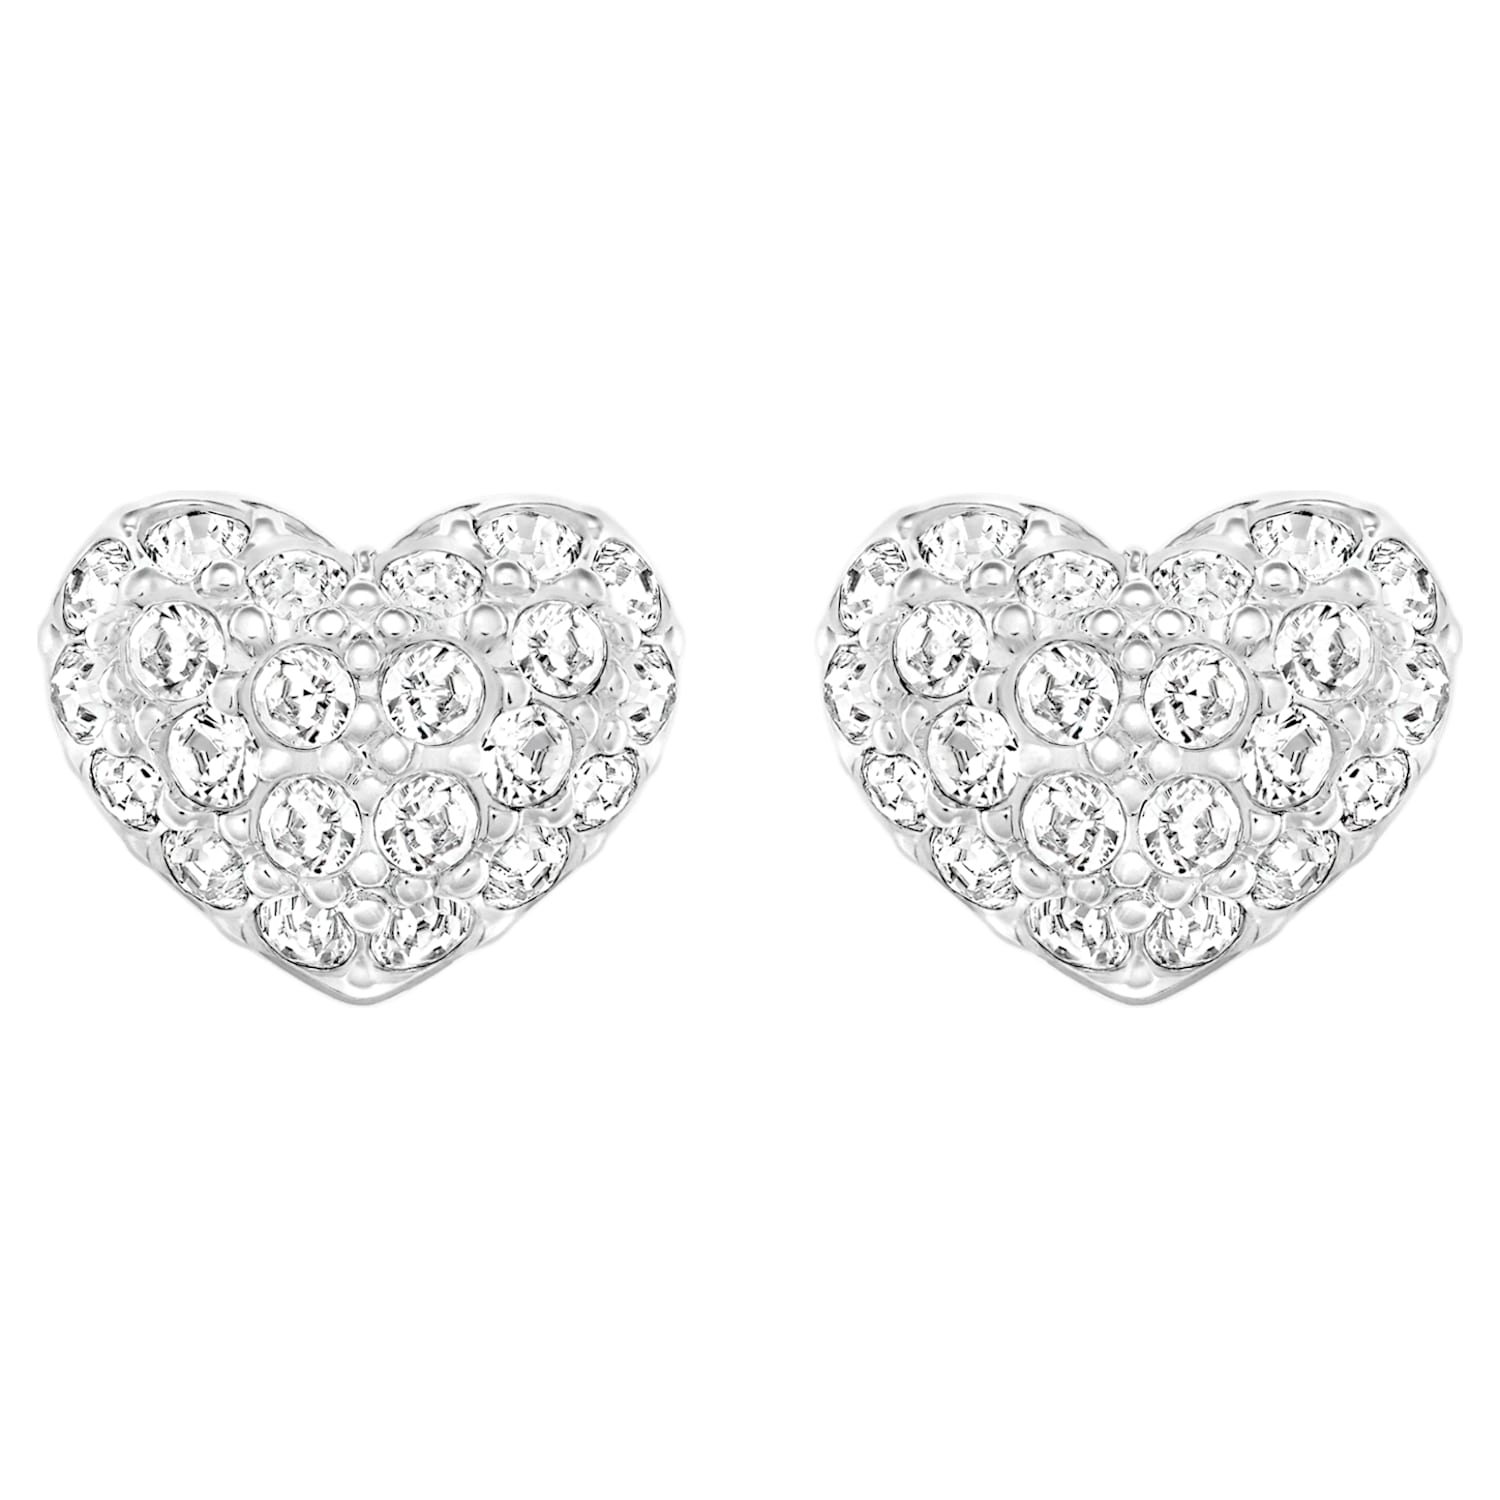 Lovley Unique Fashion Heart Shape Crystal  Stud Earring For Women Elegant Gift 